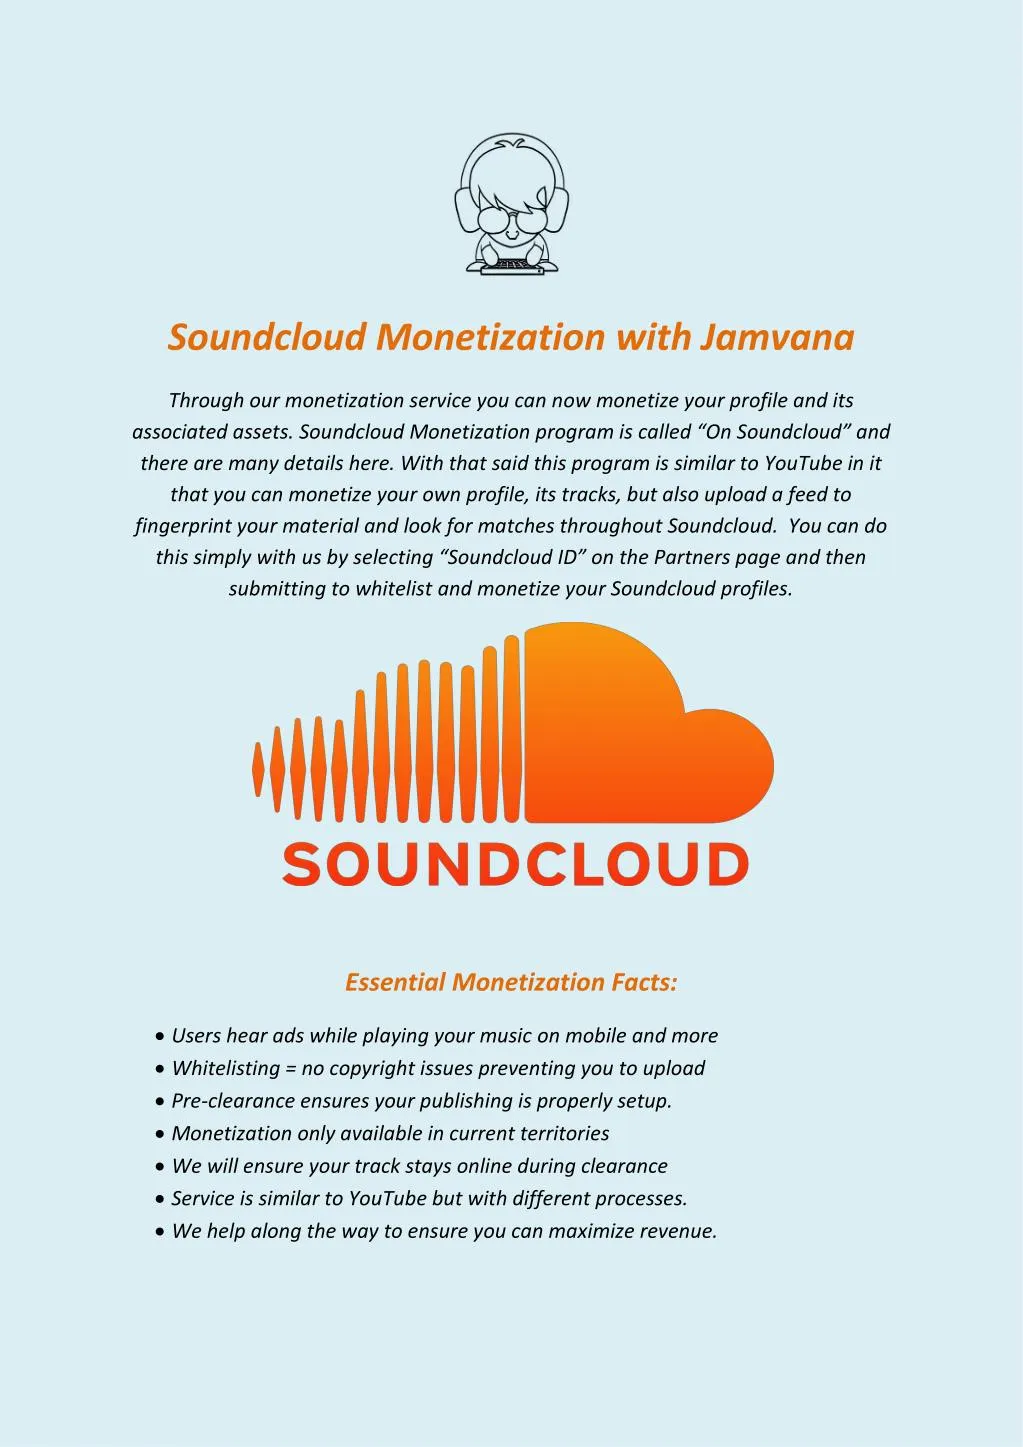 soundcloud monetization with jamvana